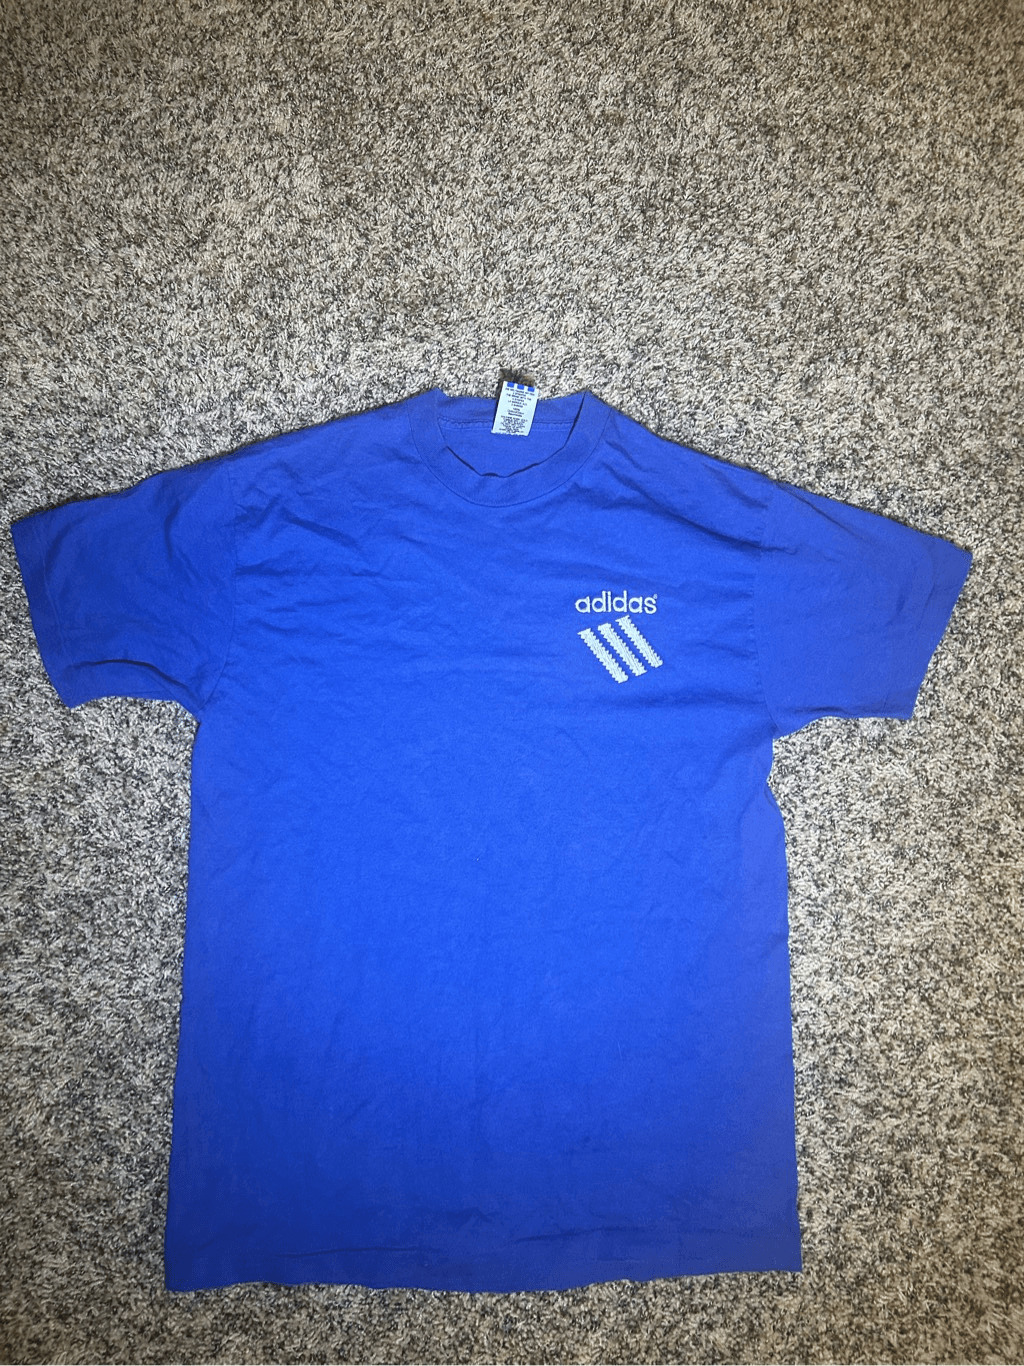 Vintage 1980s Single Stitch Blue Adidas Tshirt Chest Print